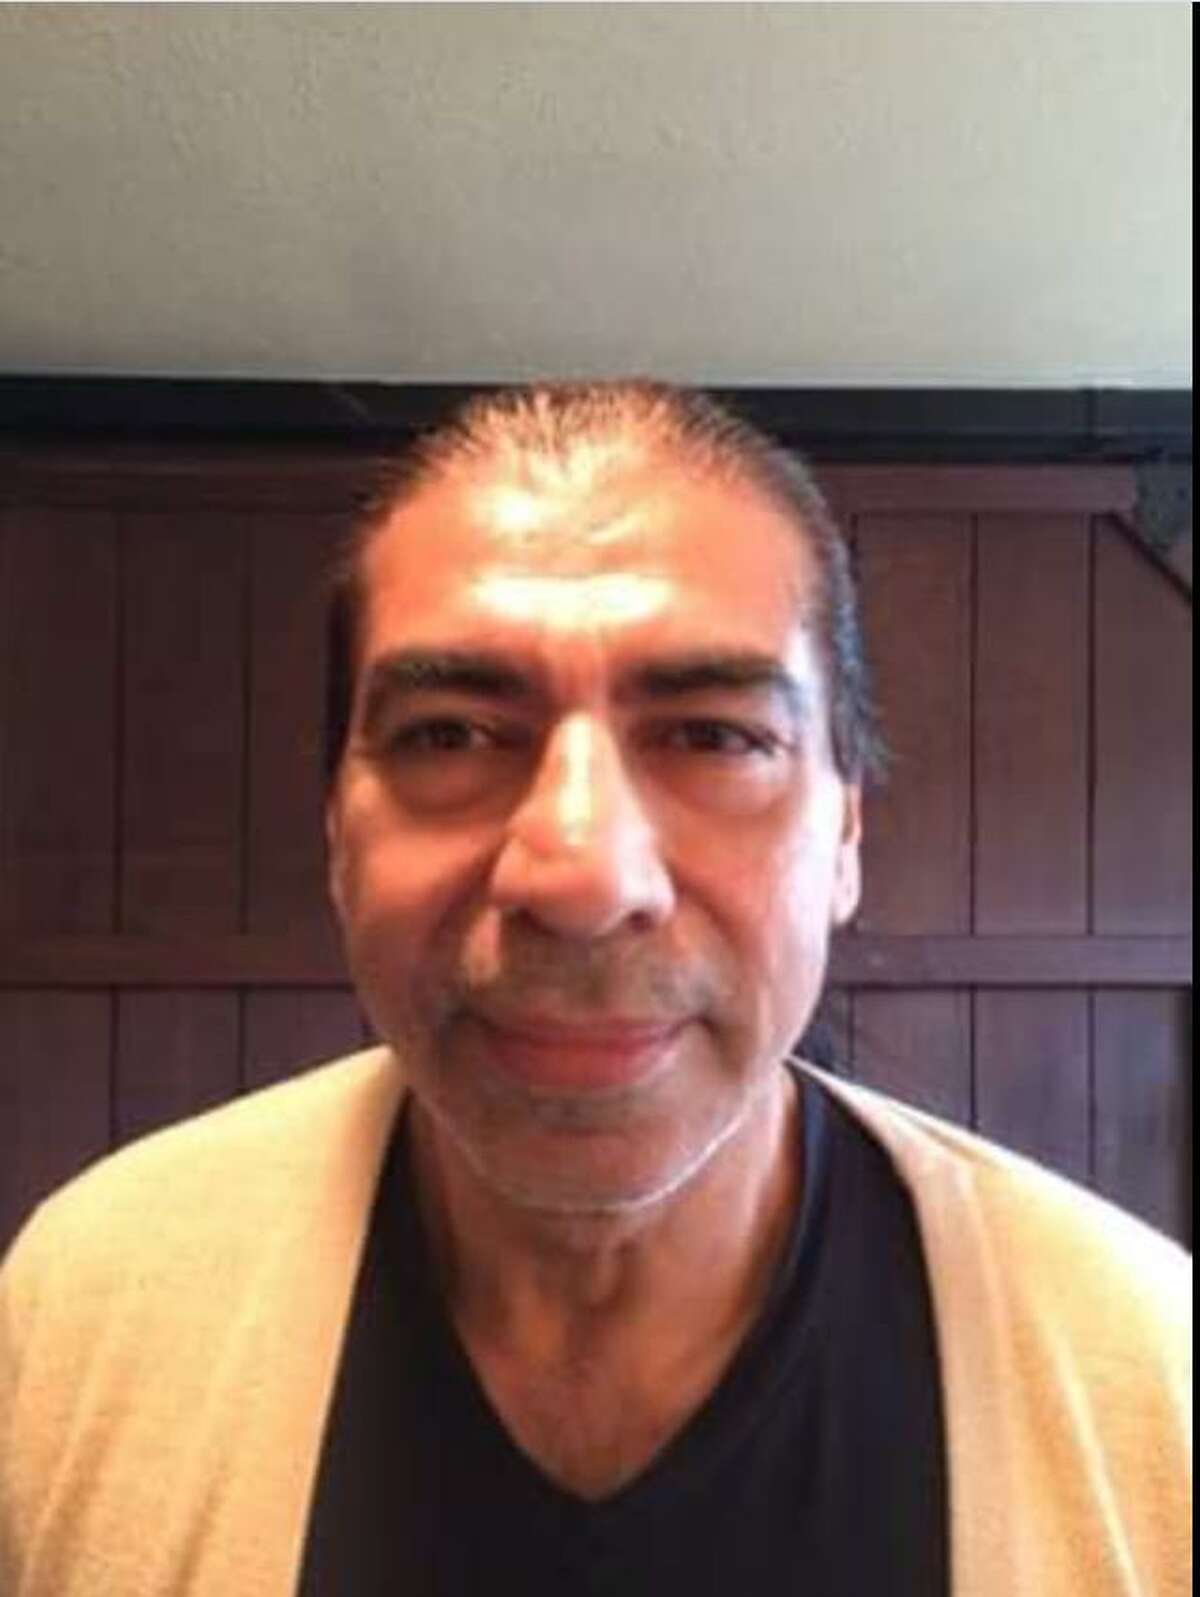 Jose Garcia Plascencia, a self-described “sobandero” massage therapist, was arrested on suspicion of sexual assault.